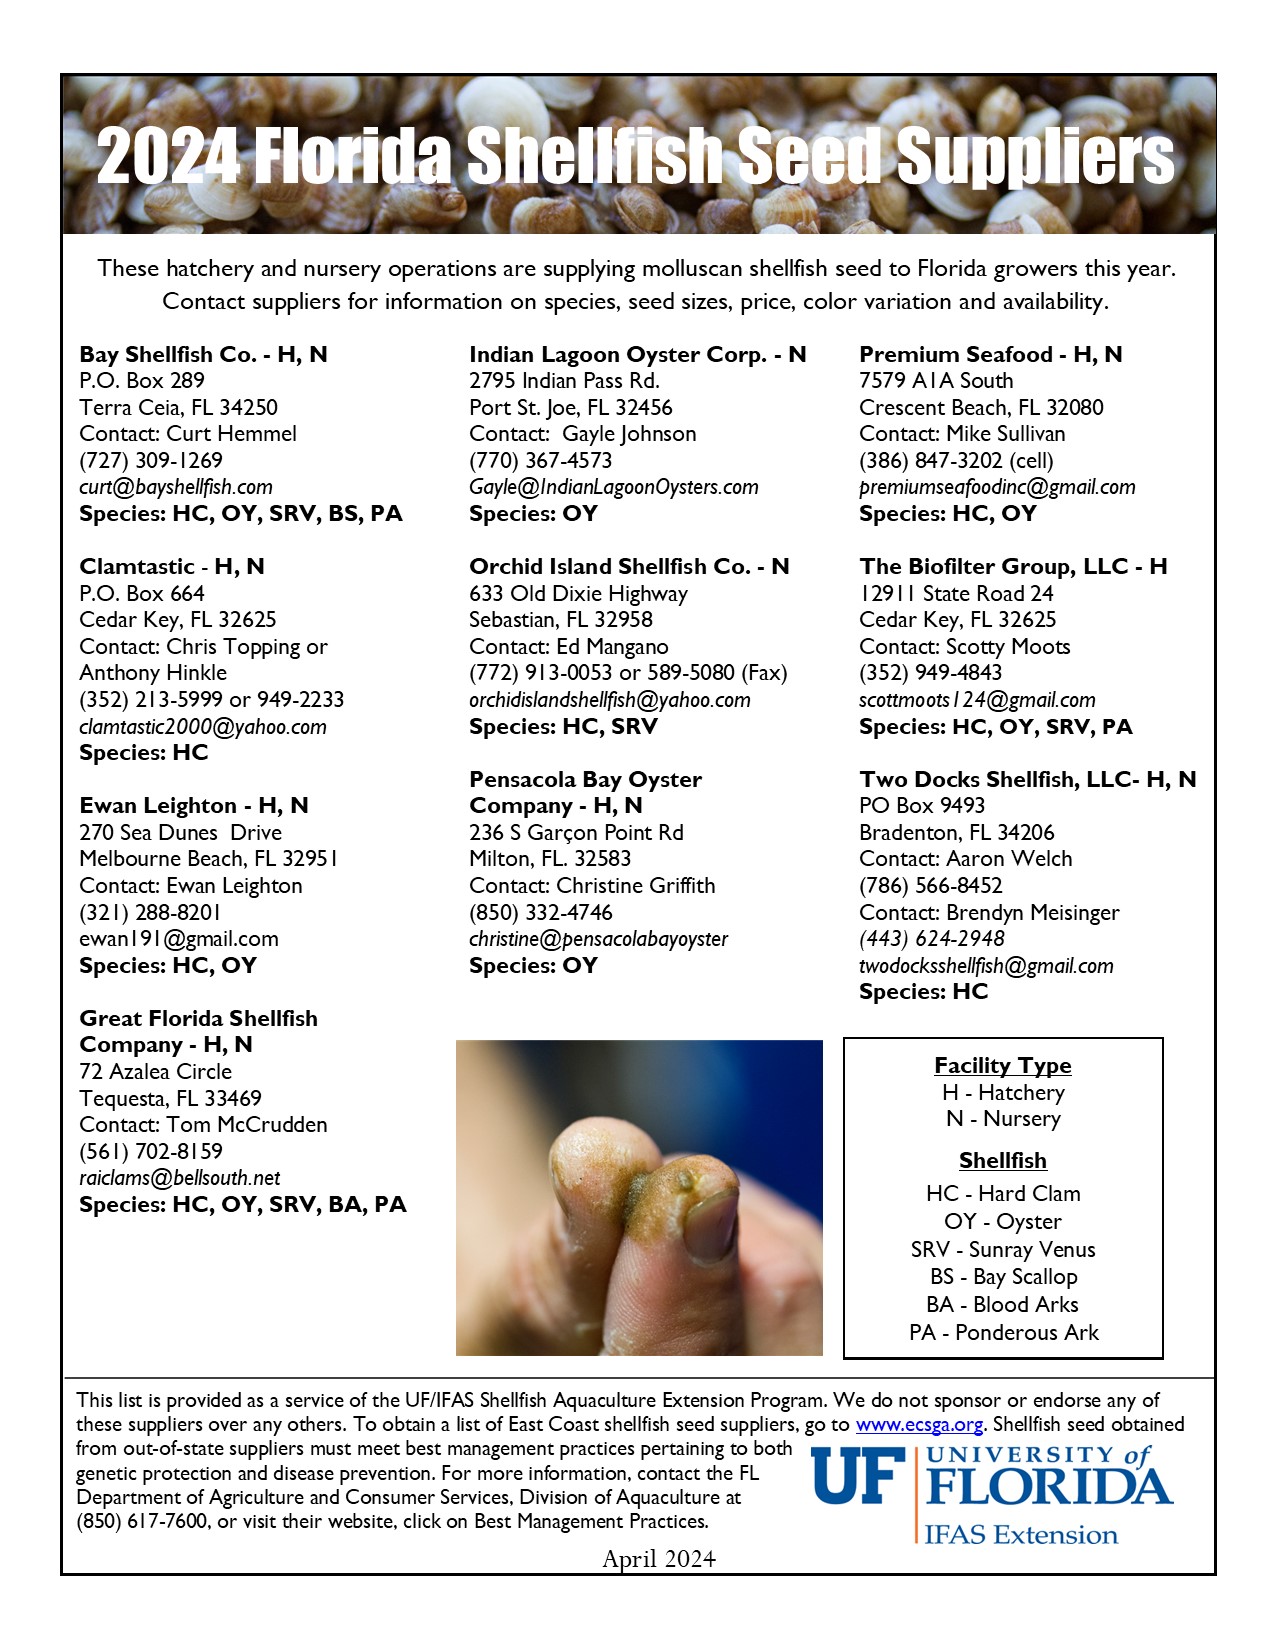 2021 Florida Shellfish Seed Suppliers